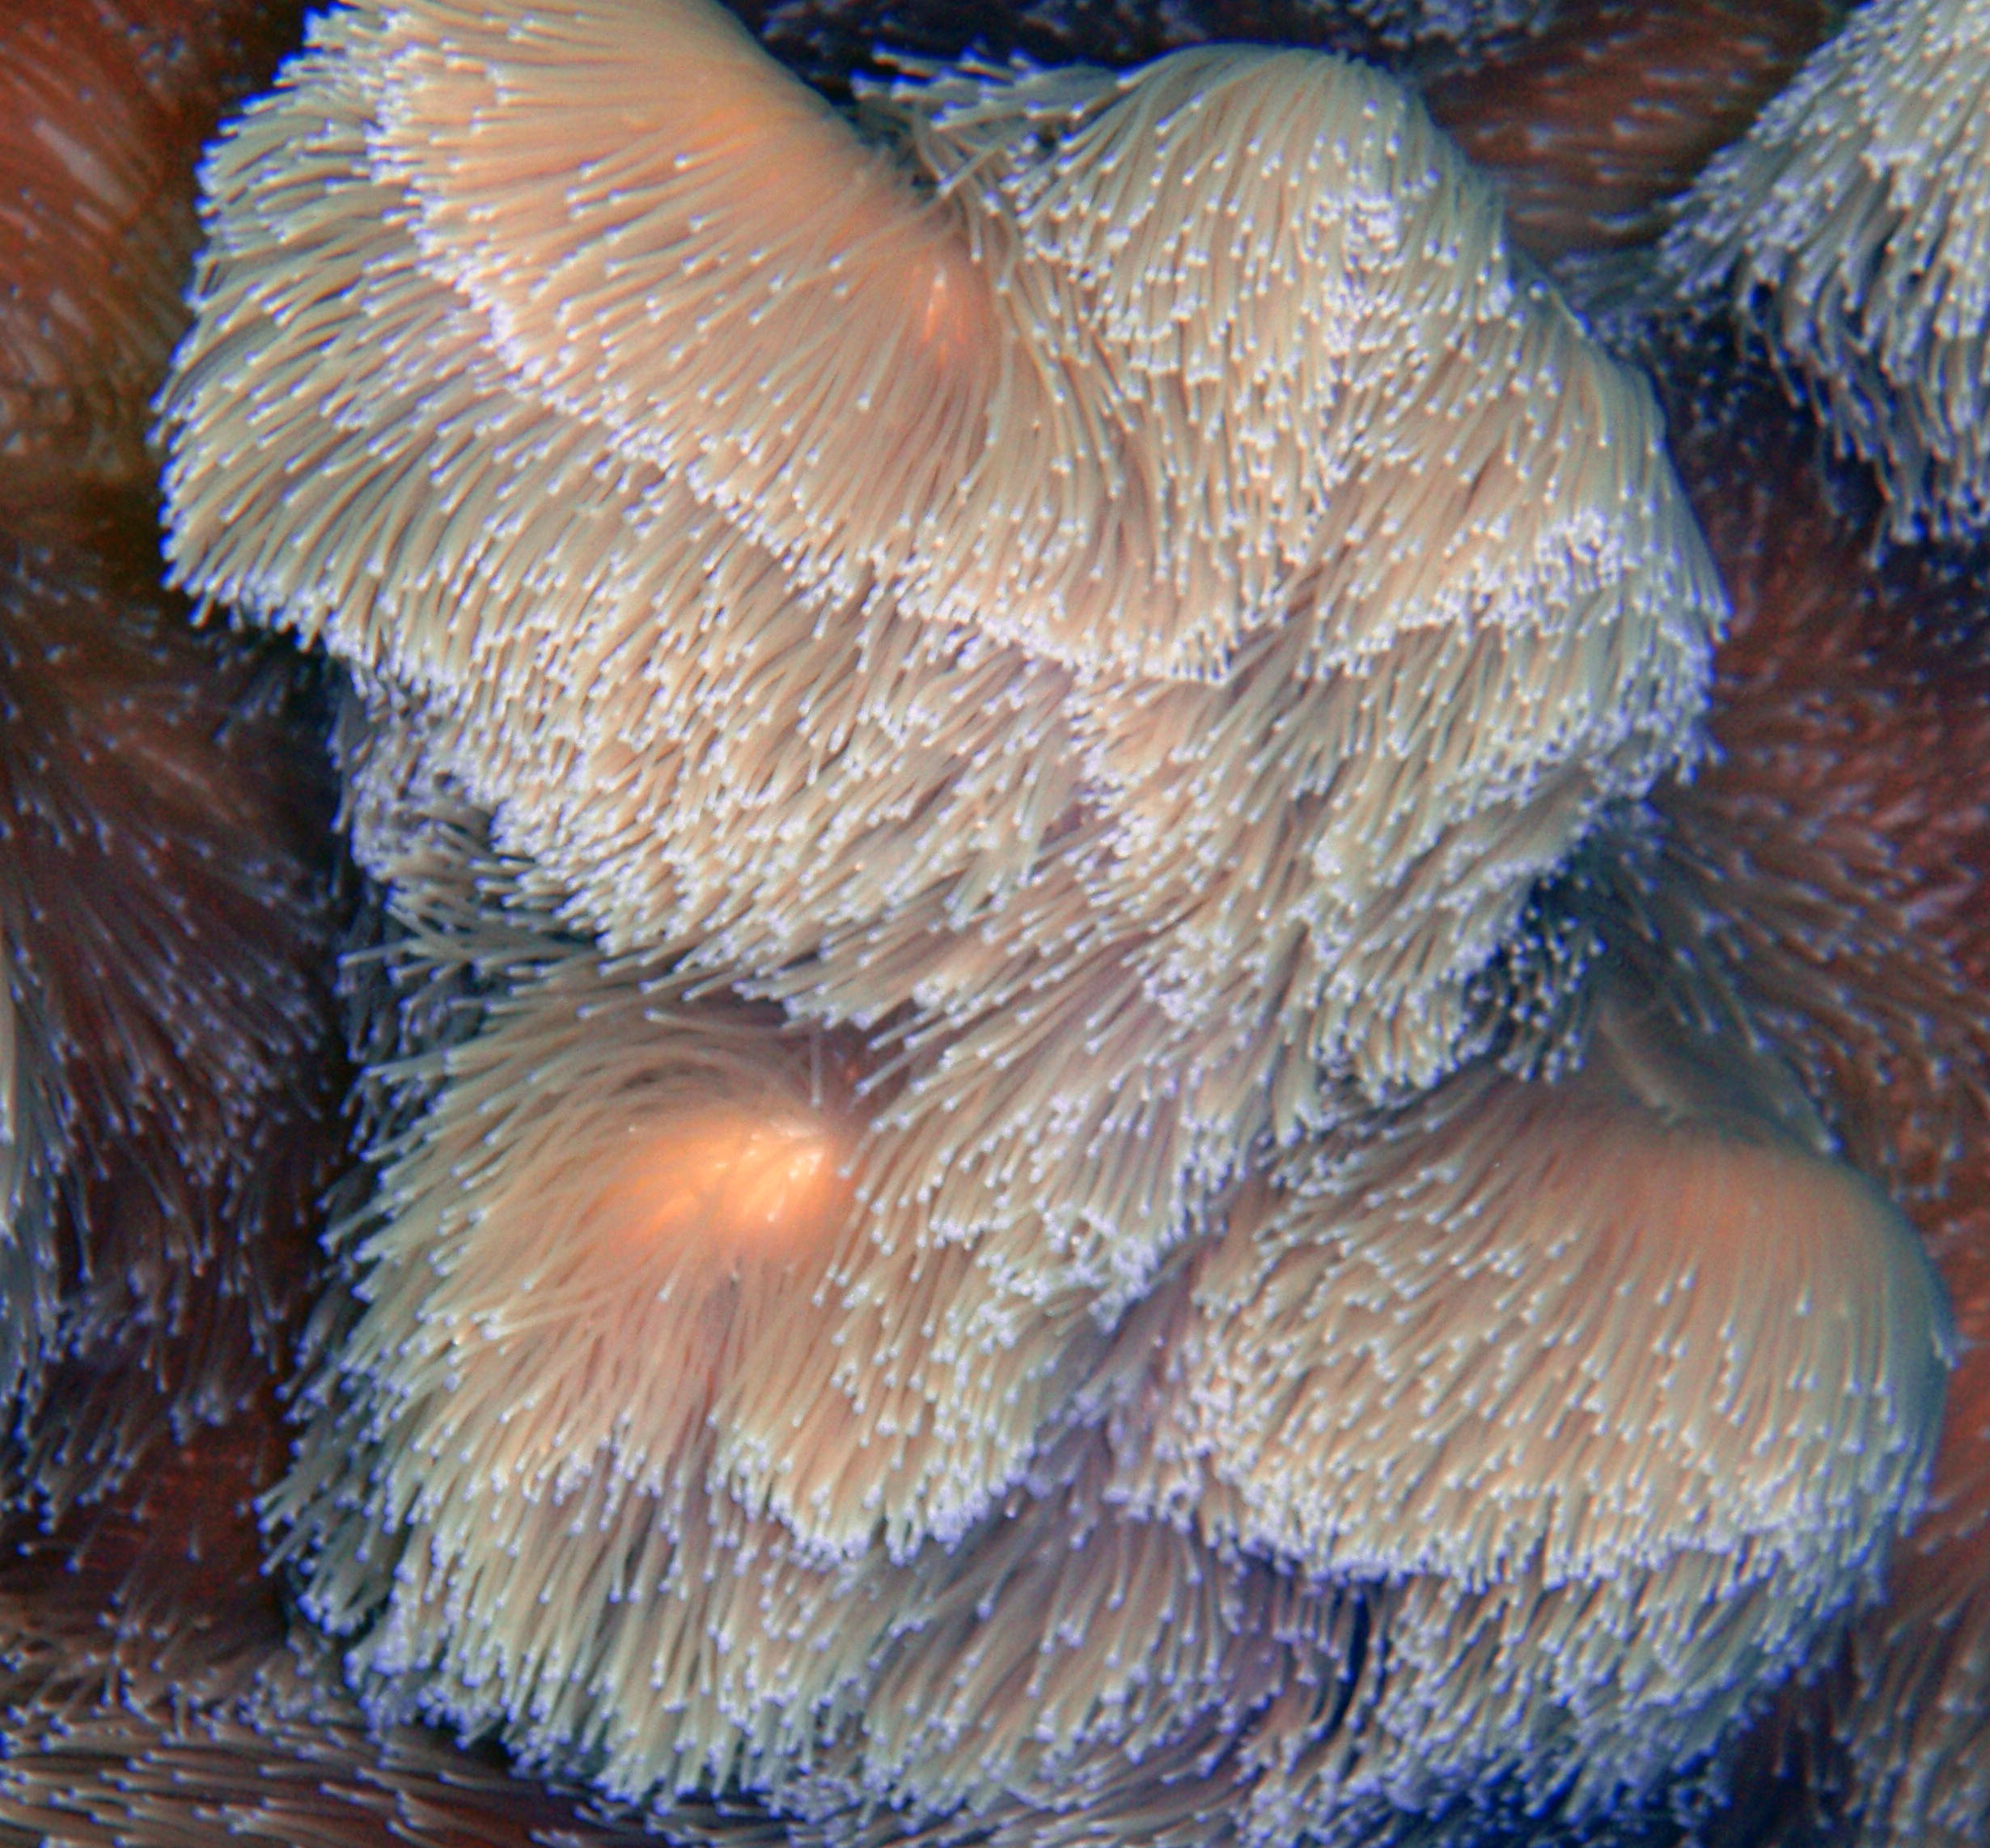 Riung area soft corals.jpg